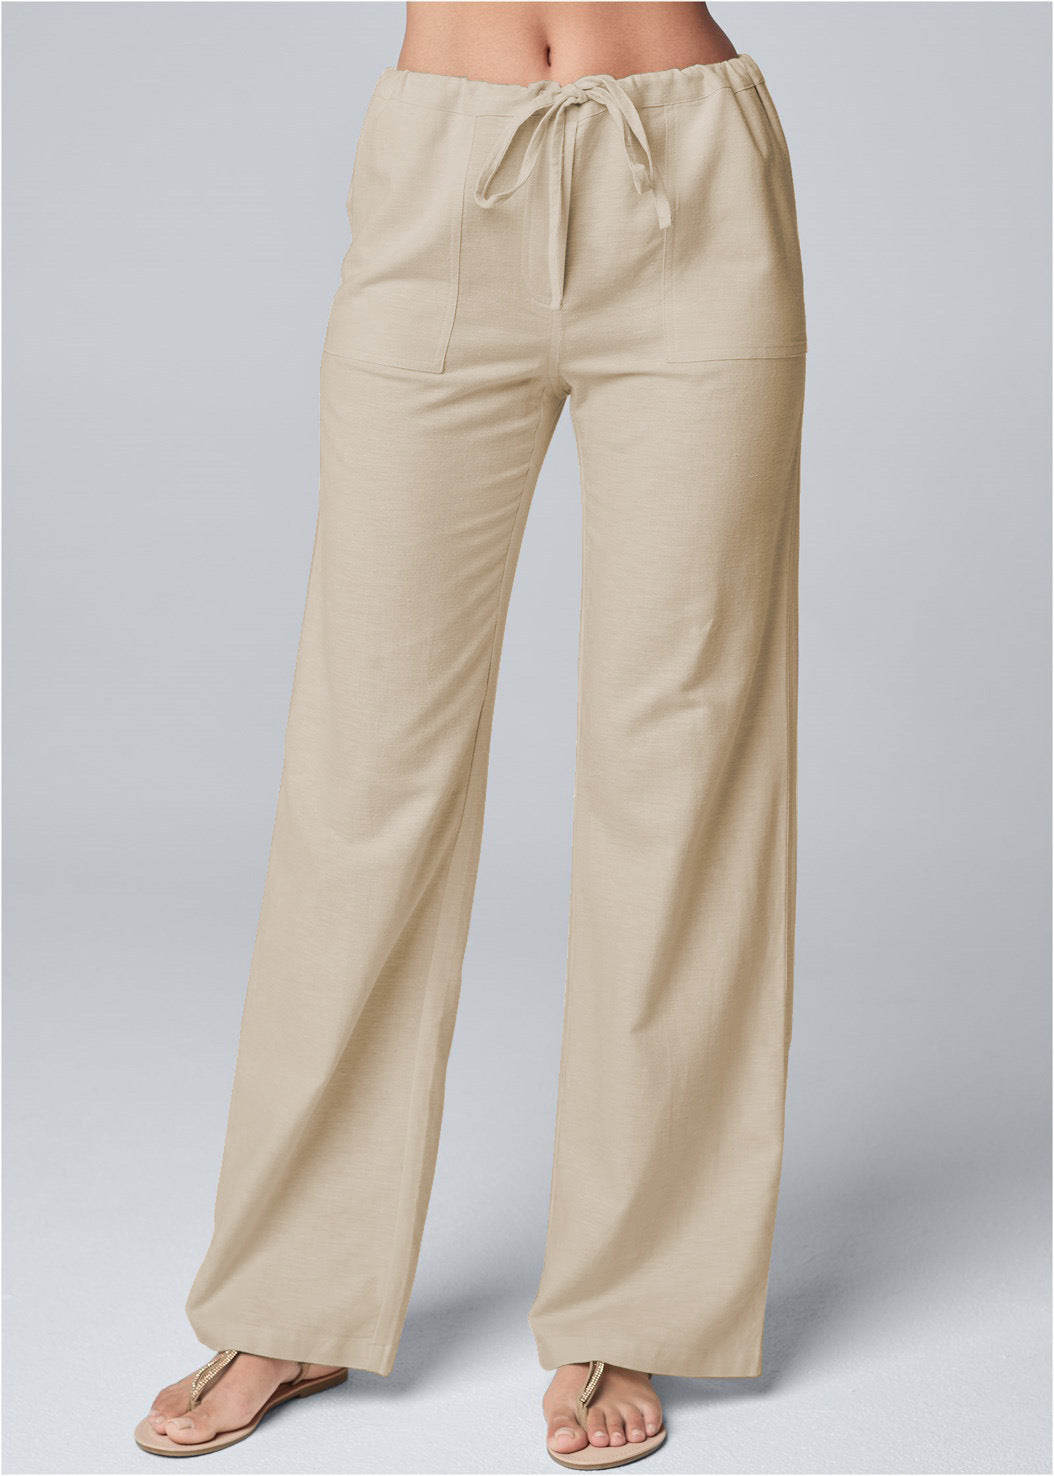 Pants  | Women's Fashion Solid Color Loose Lace-up Cotton And Linen Straight-leg Pants | Khaki |  2XL| thecurvestory.myshopify.com